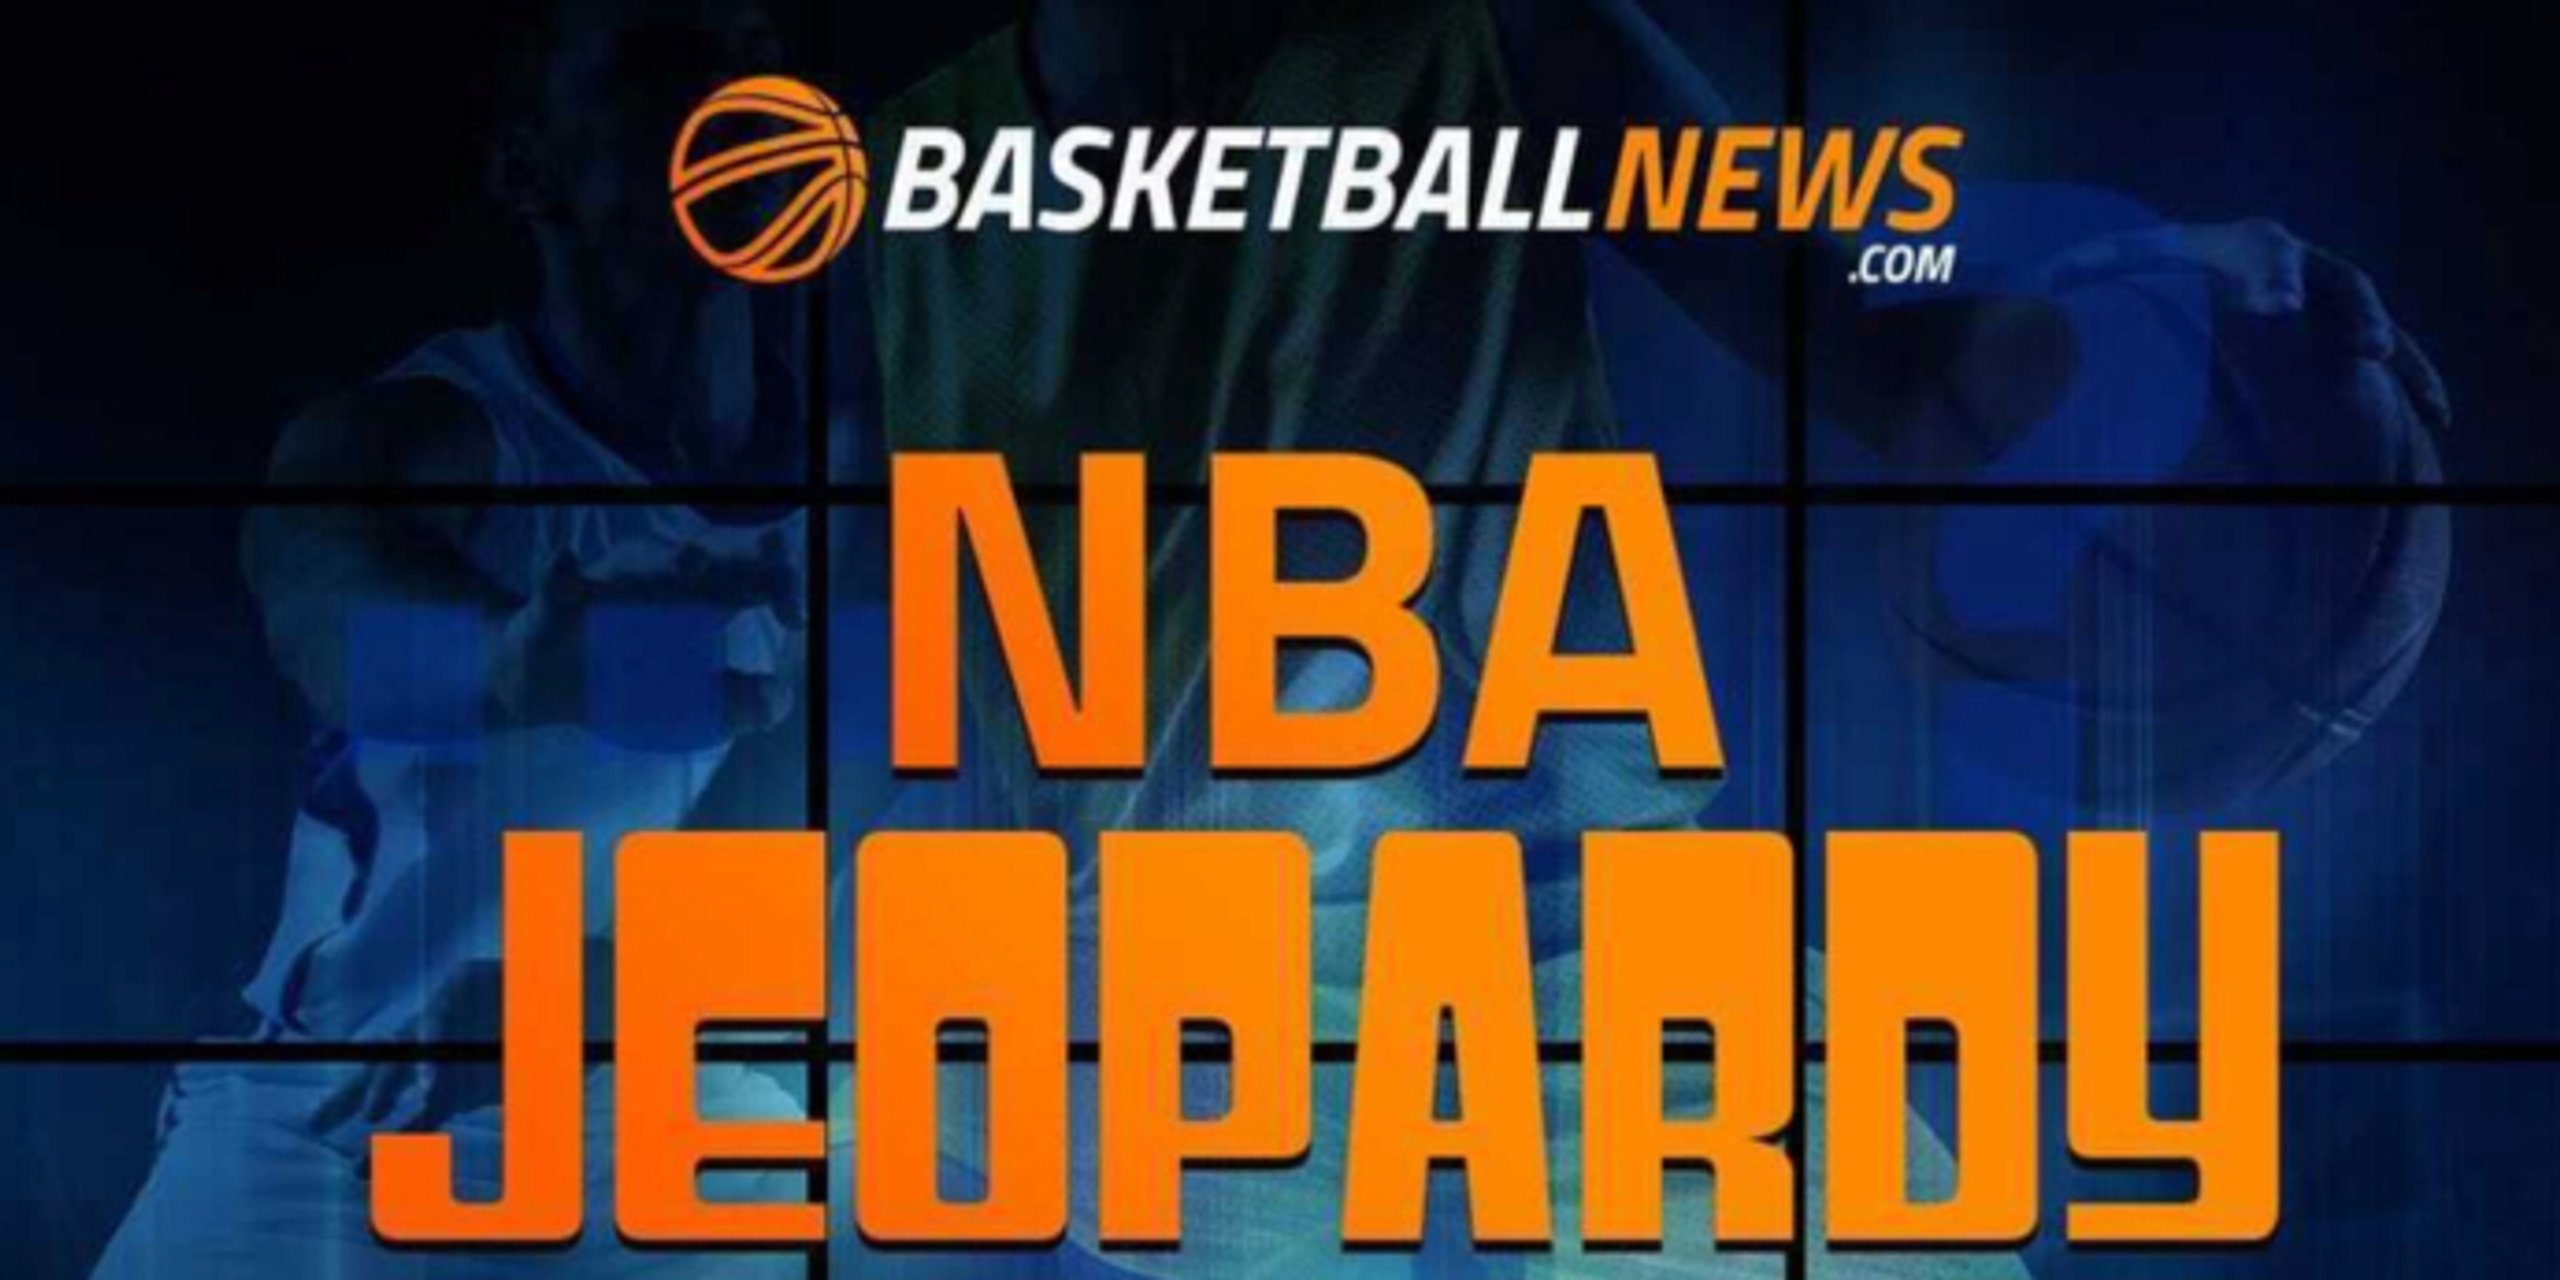 BasketballNews.com's NBA Jeopardy show